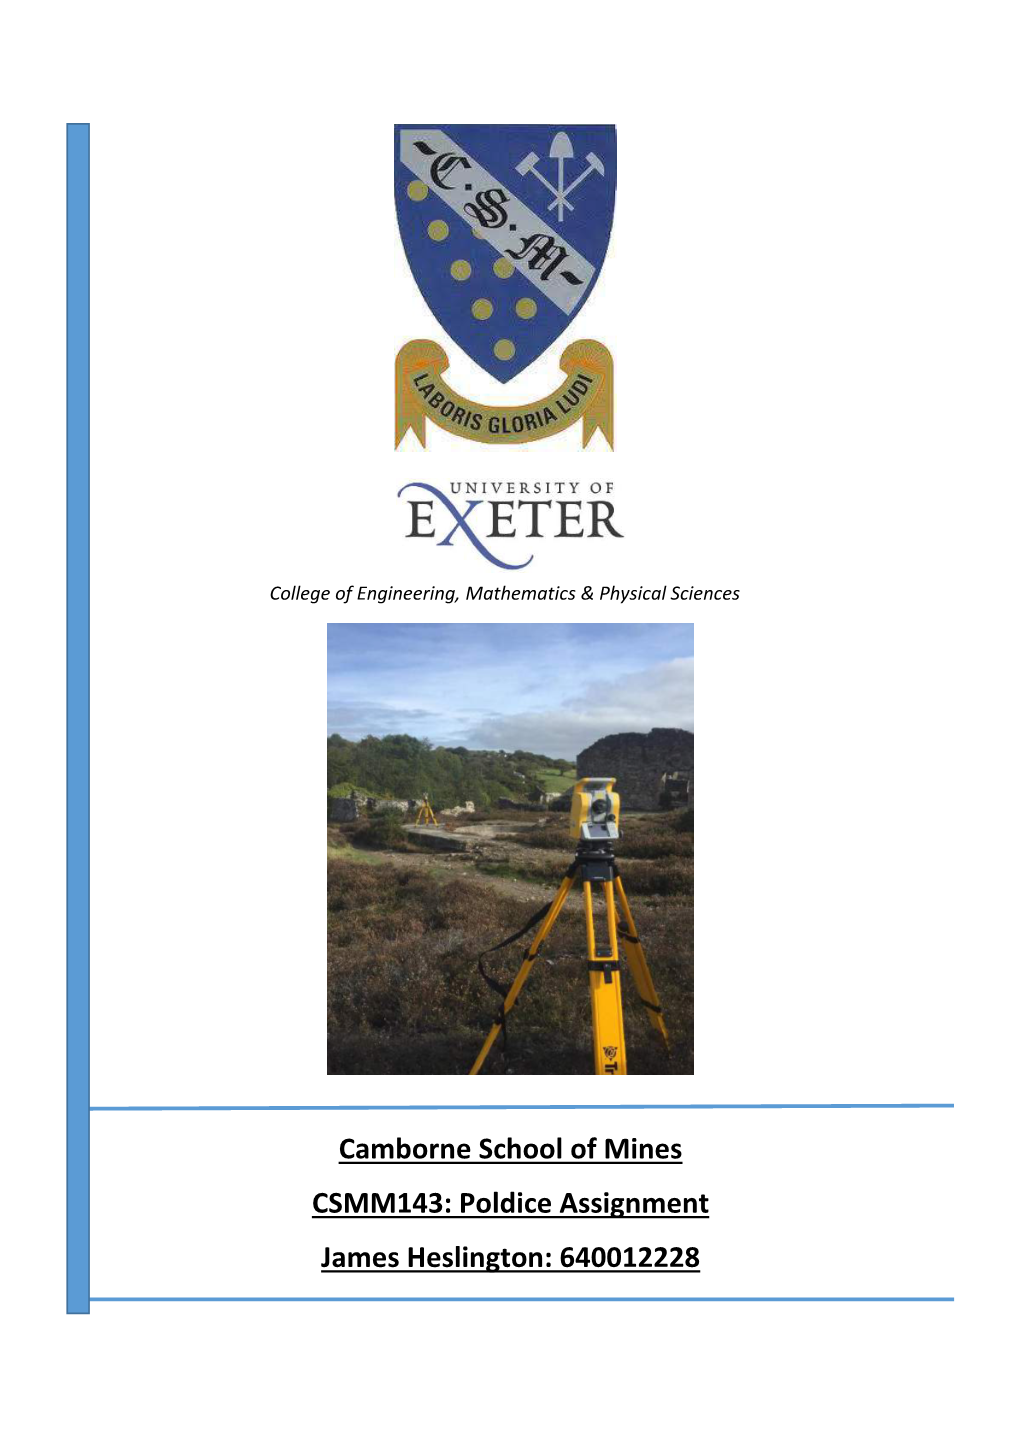 Camborne School of Mines CSMM143: Poldice Assignment James Heslington: 640012228